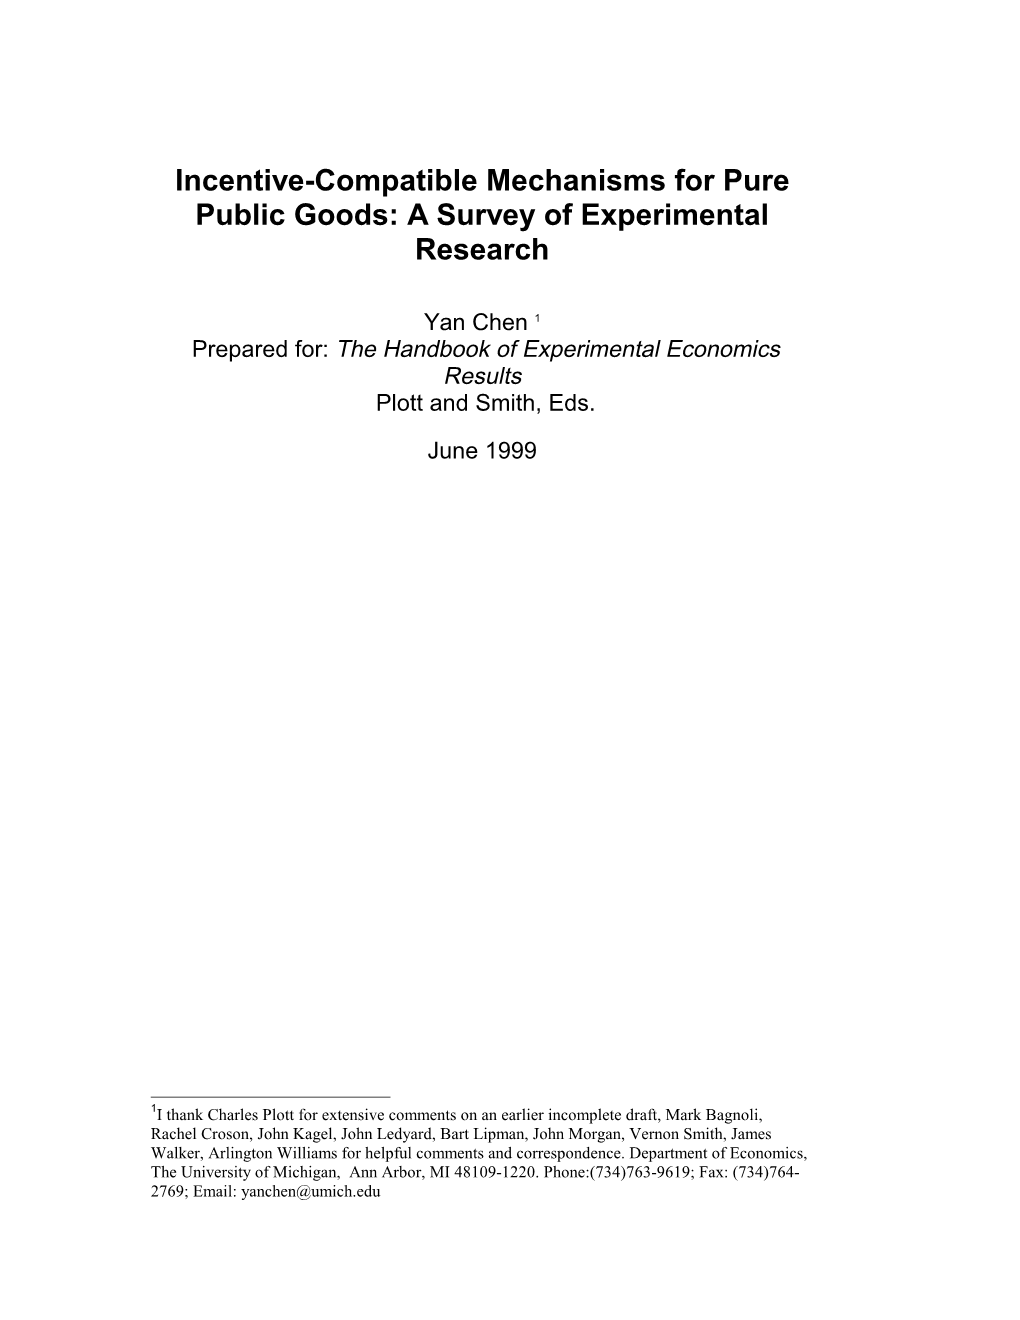 Incentive-Compatible Mechanisms for Pure Public Goods: a Survey of Experimental Research